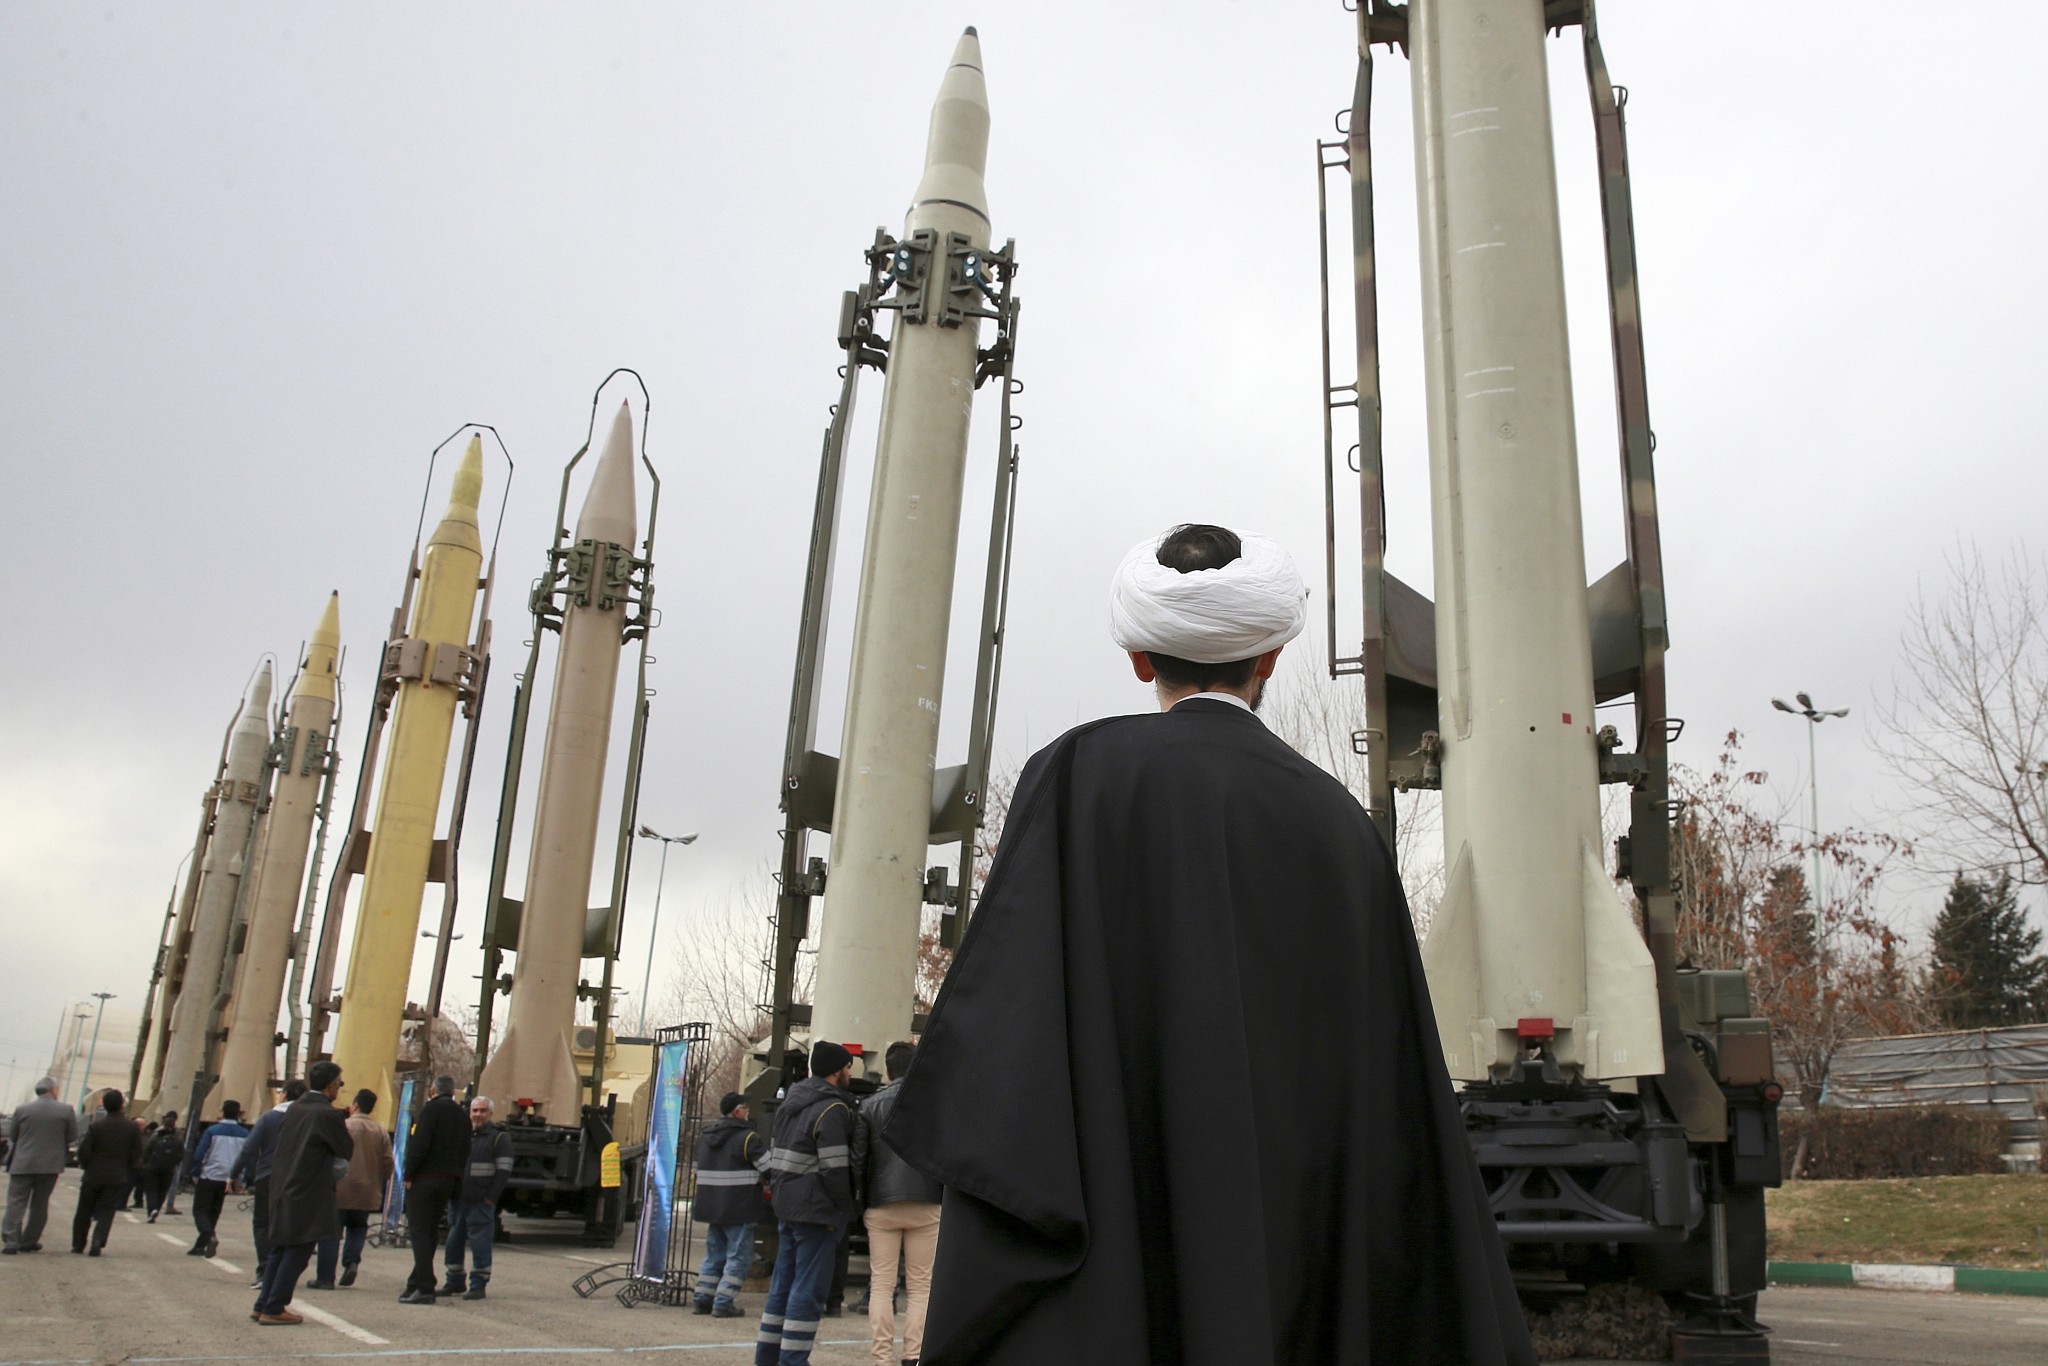 IRGC says it launched military satellite into orbit